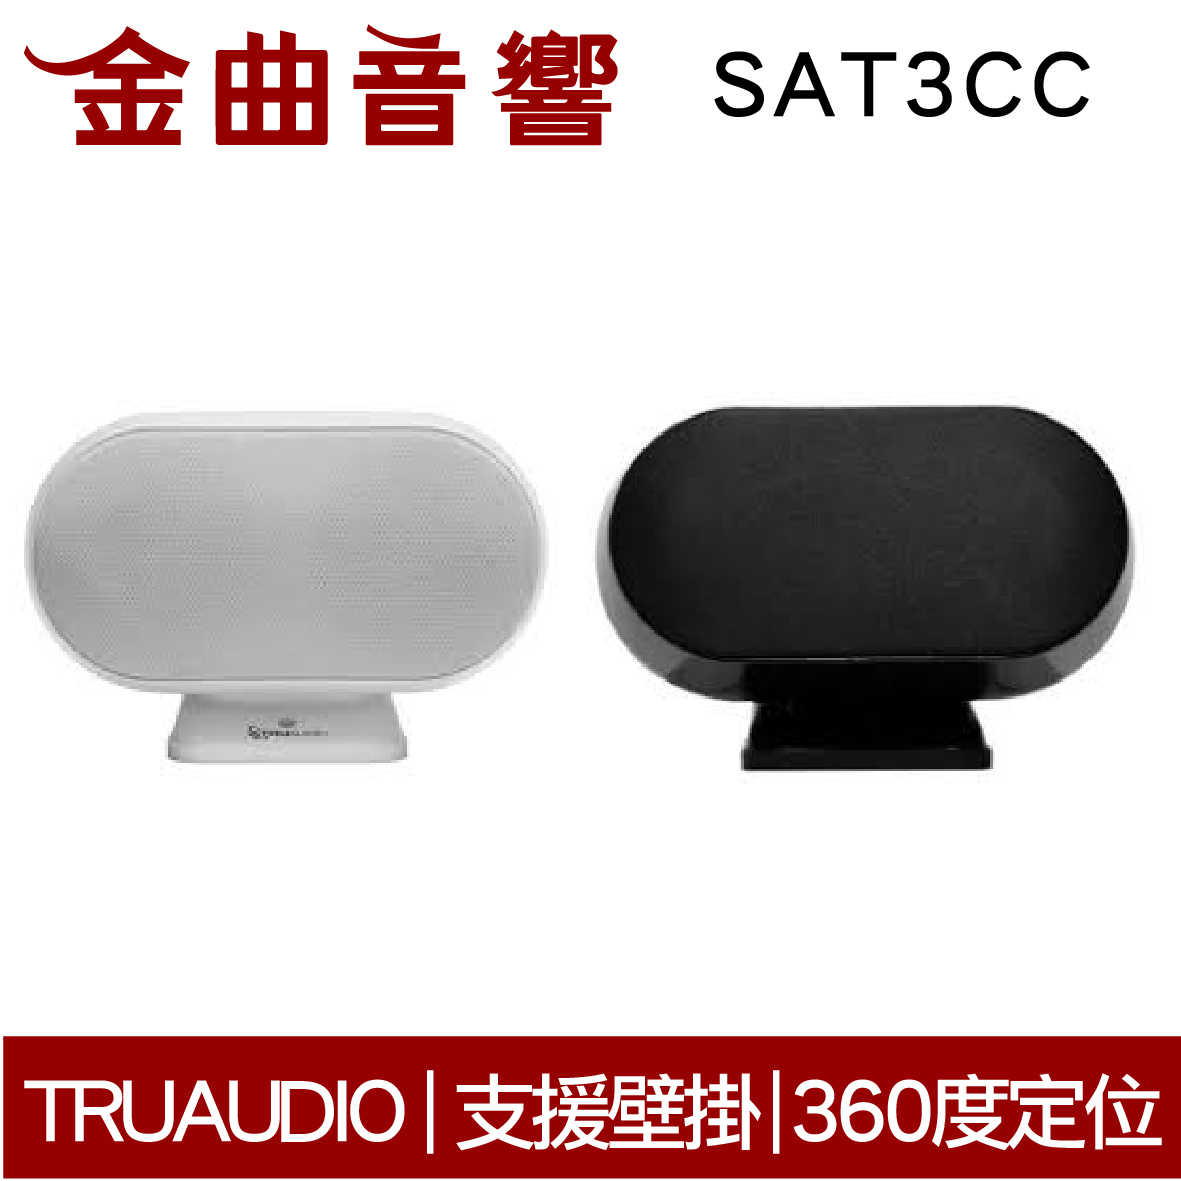 Truaudio SAT3CC 360度 支援壁掛 磁性安裝 揚聲器 | 金曲音響